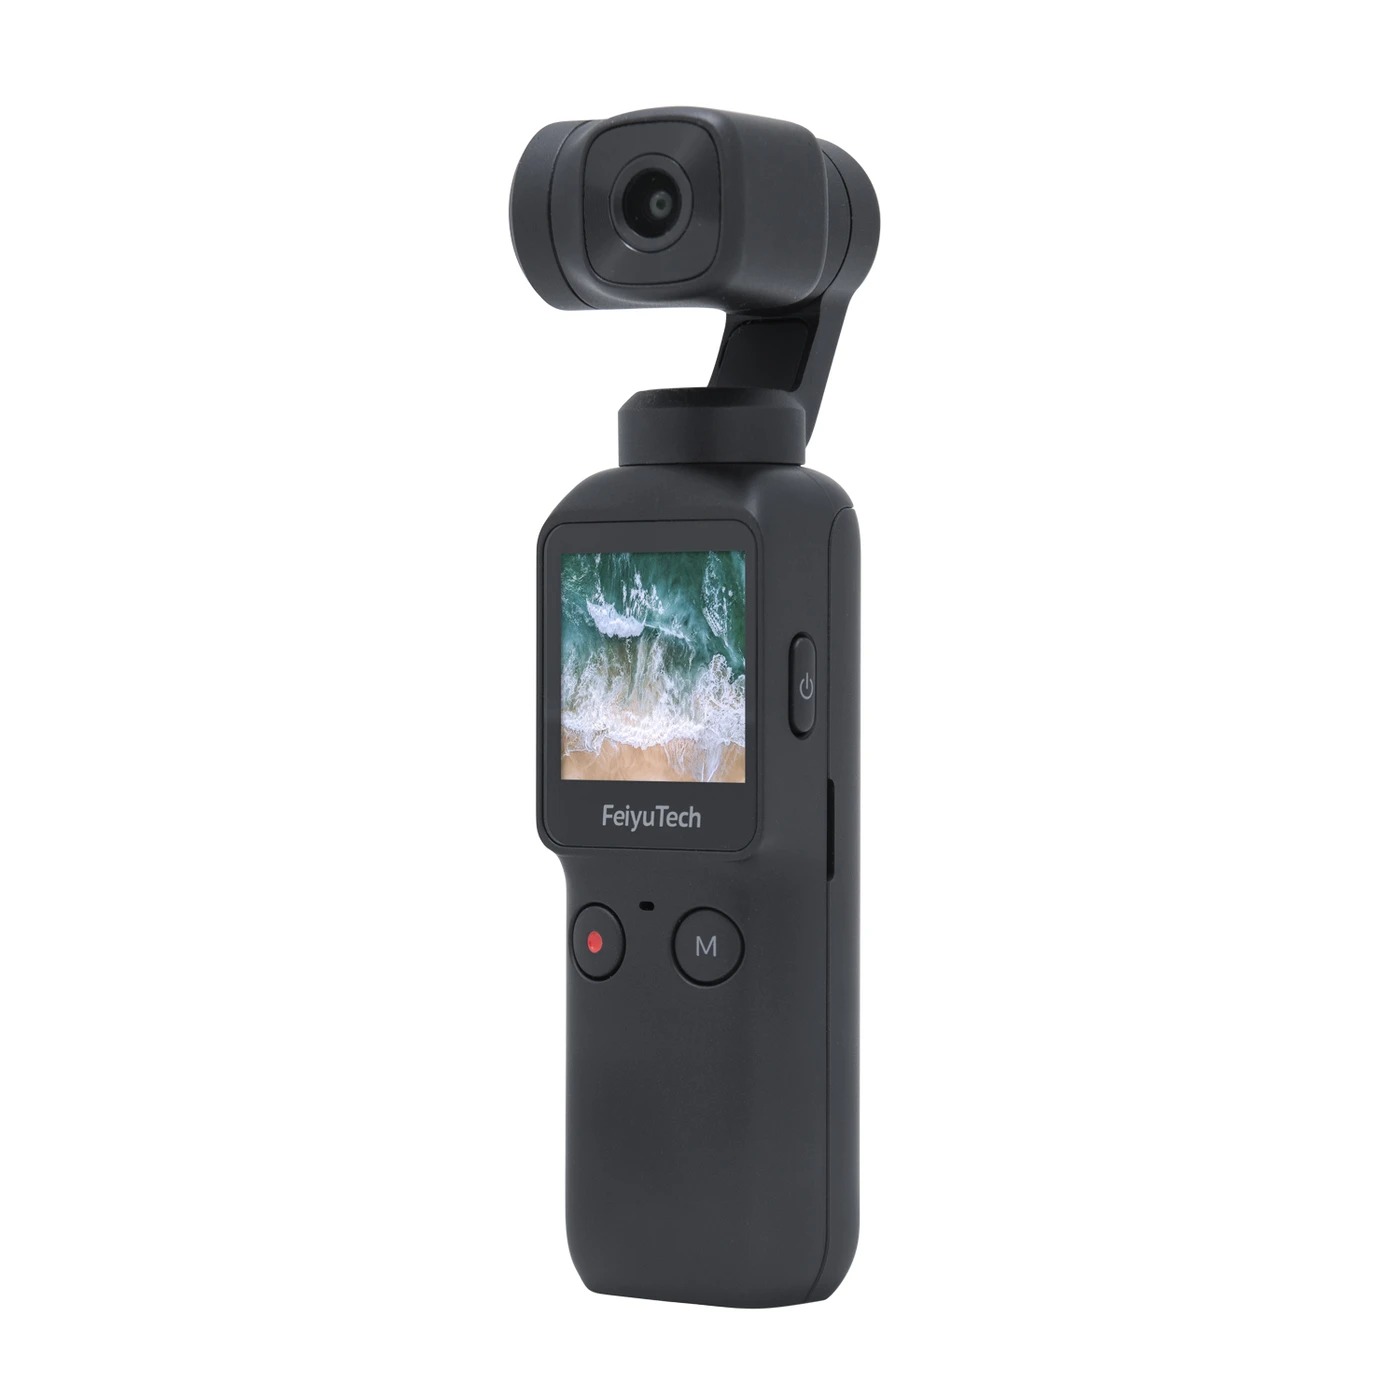 Feiyutech FEIYU Pocket Palm Camera 4K HD 6-Axis Hybrid Smart Stabilized Handheld Camera with wide angle lens APP control